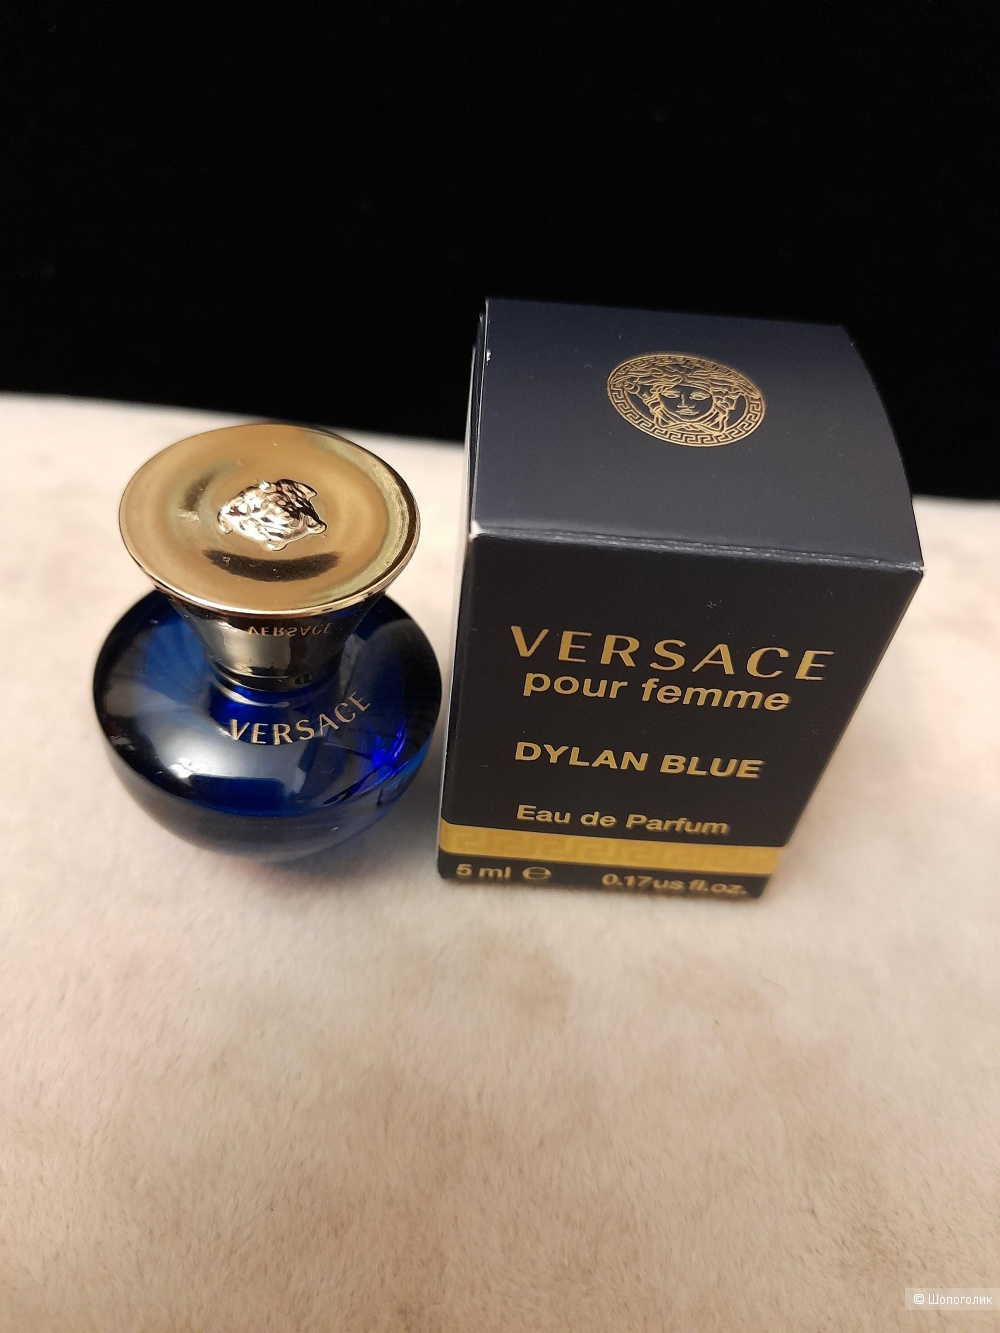 Versace por femme, Dylan Blue, 5ml